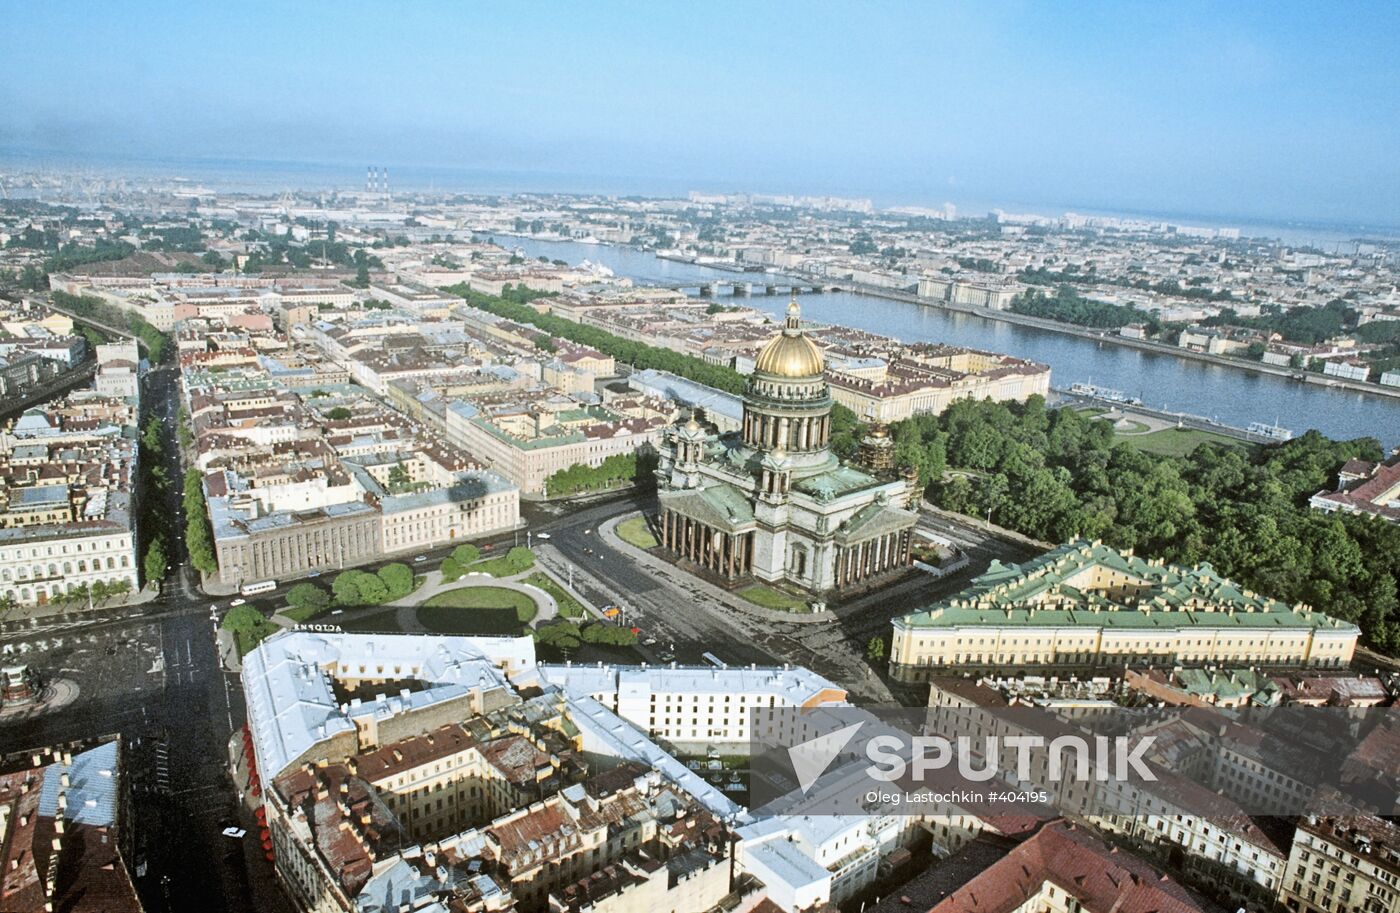 Panoramic view of St. Petersburg